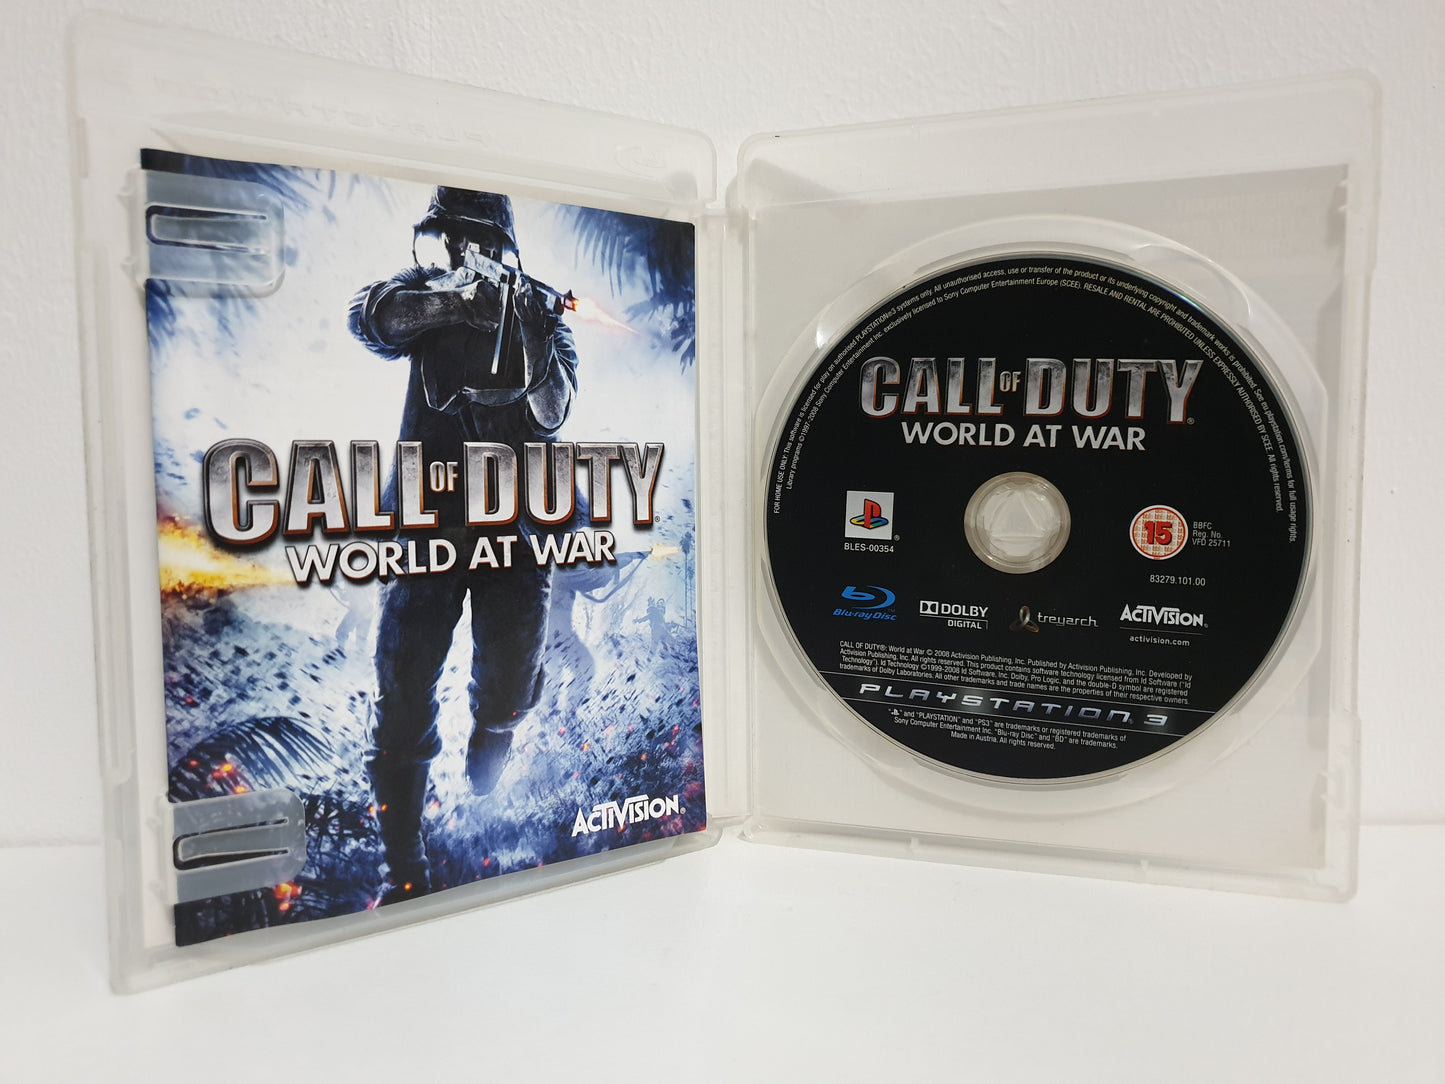 Call of Duty : World at War PS3 - Occasion bon état